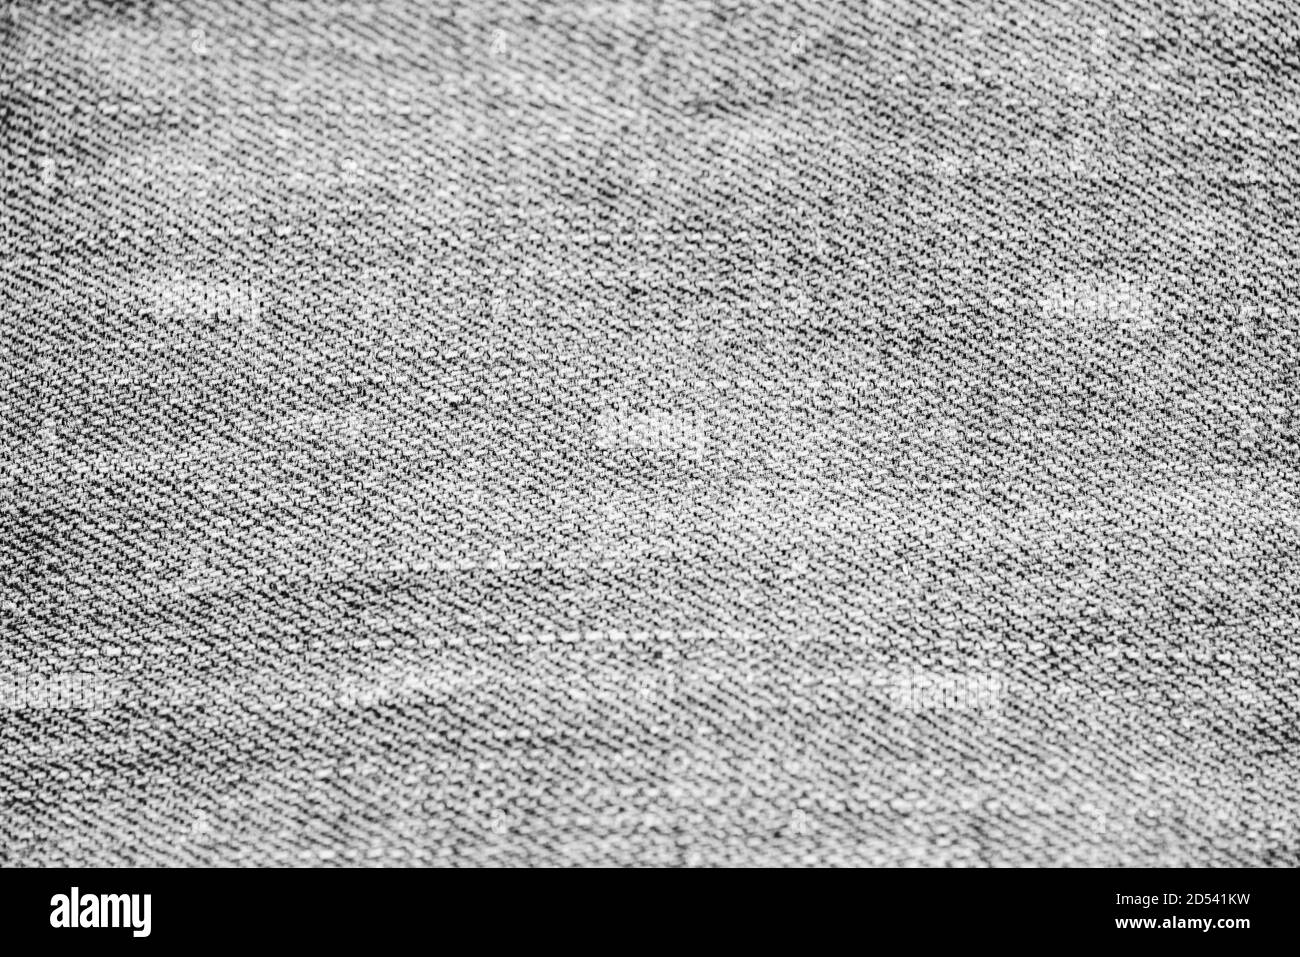 black Denim fabric texture. Black jeans denim cloth fragment as a  background texture composition Stock Photo - Alamy